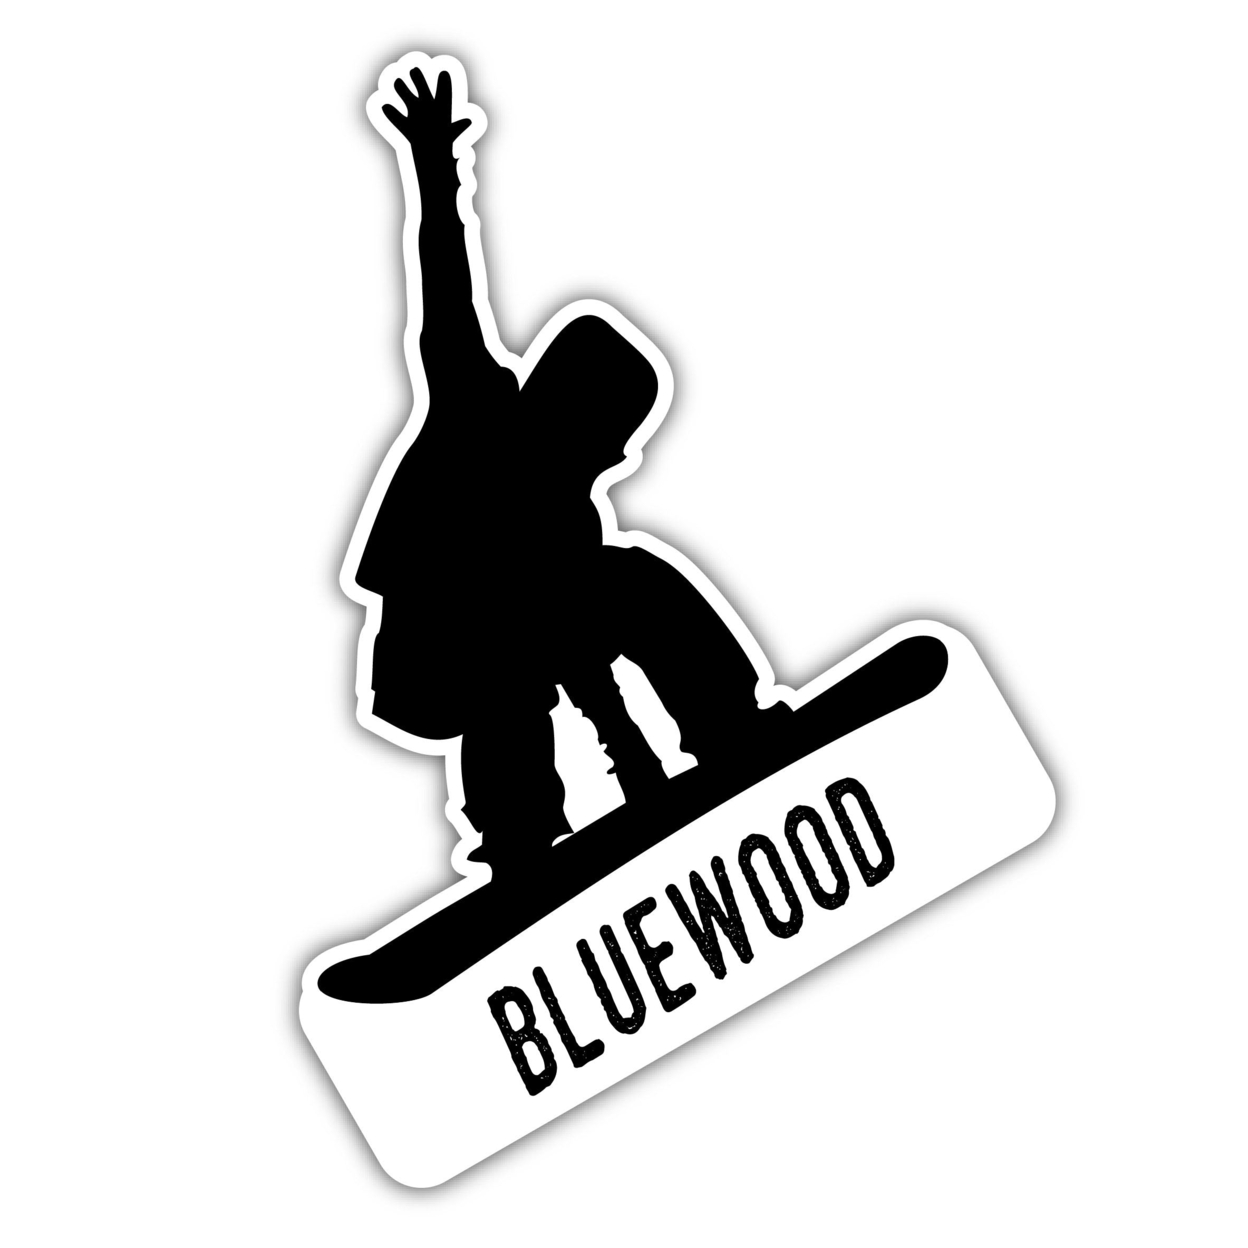 Bluewood Washington Ski Adventures Souvenir Approximately 5 X 2.5-Inch Vinyl Decal Sticker Goggle Design